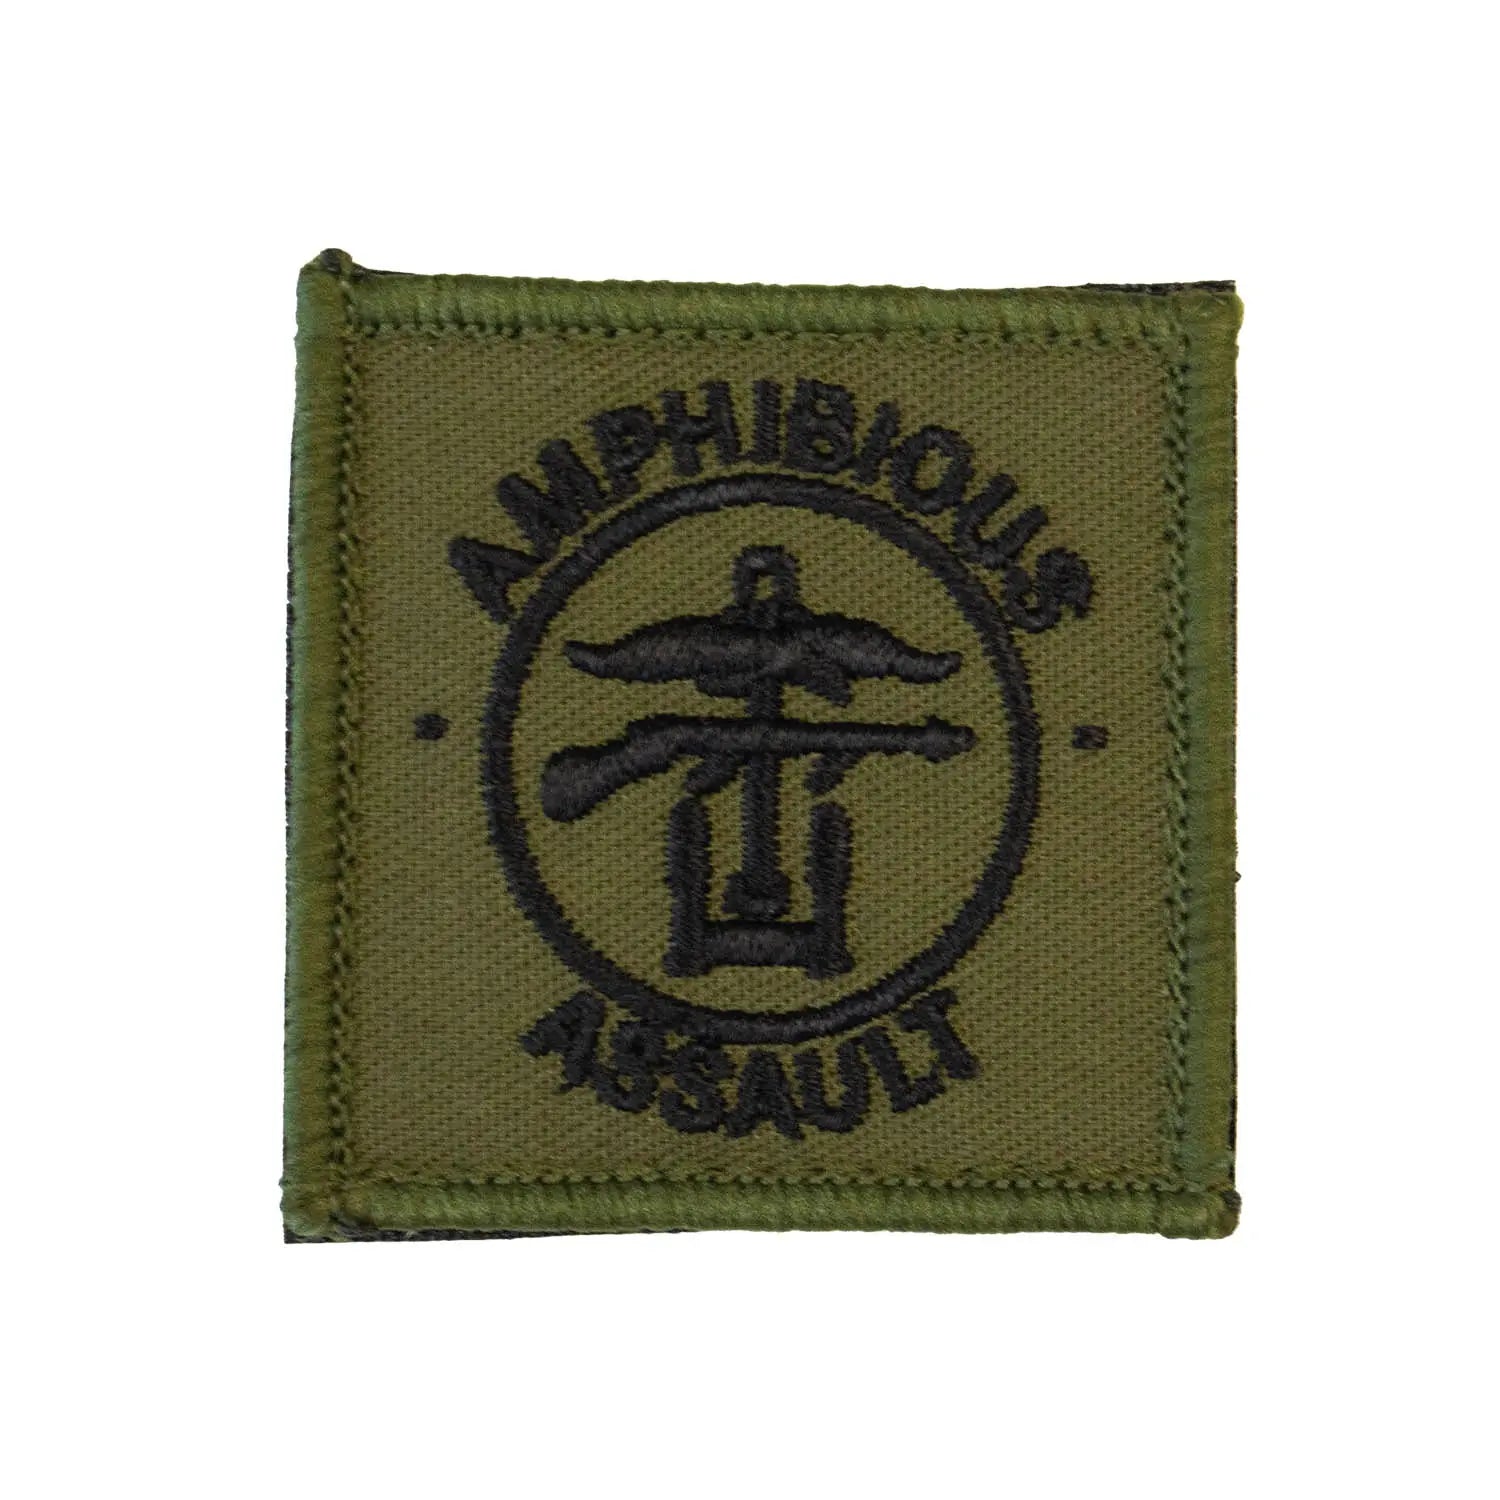 Amphibious Assault Formation Hook & Loop Fastening Royal Marines (RM) Royal Navy Badge wyedean